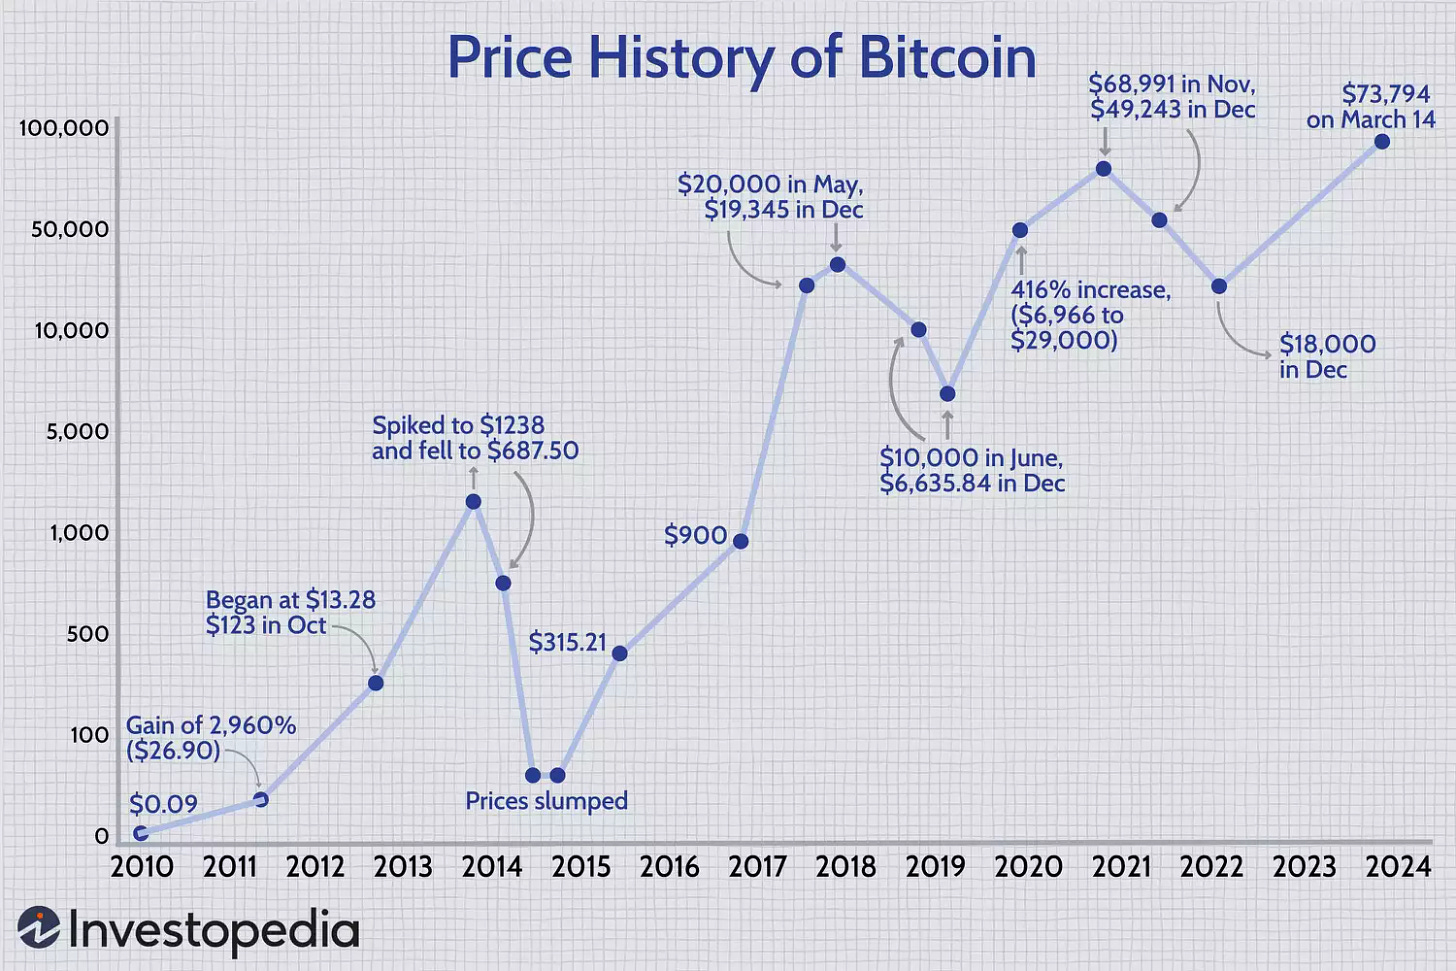 Price History of Bitcoin